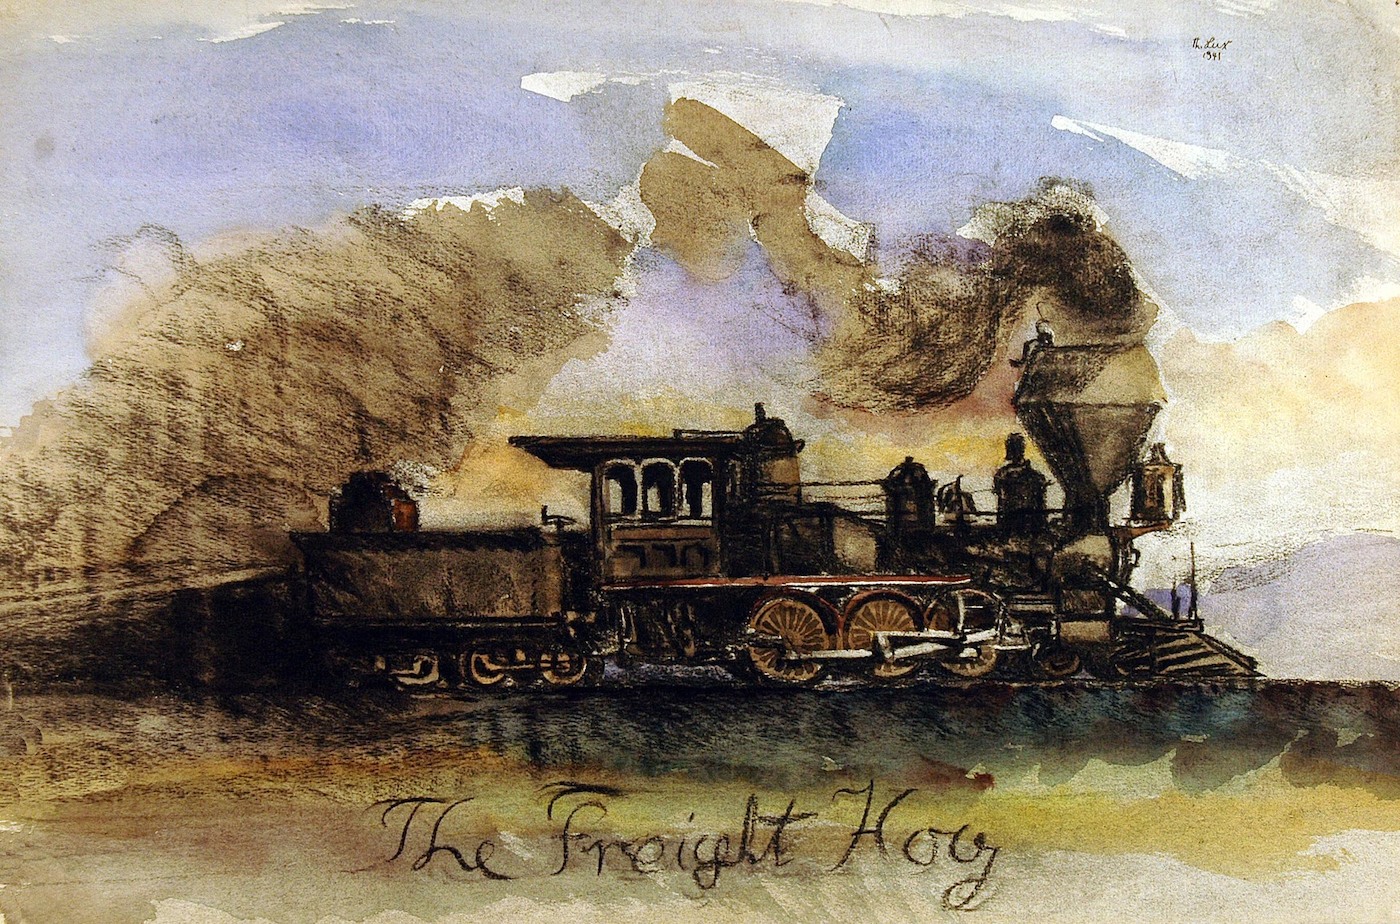 Locomotives. The Freight Hog